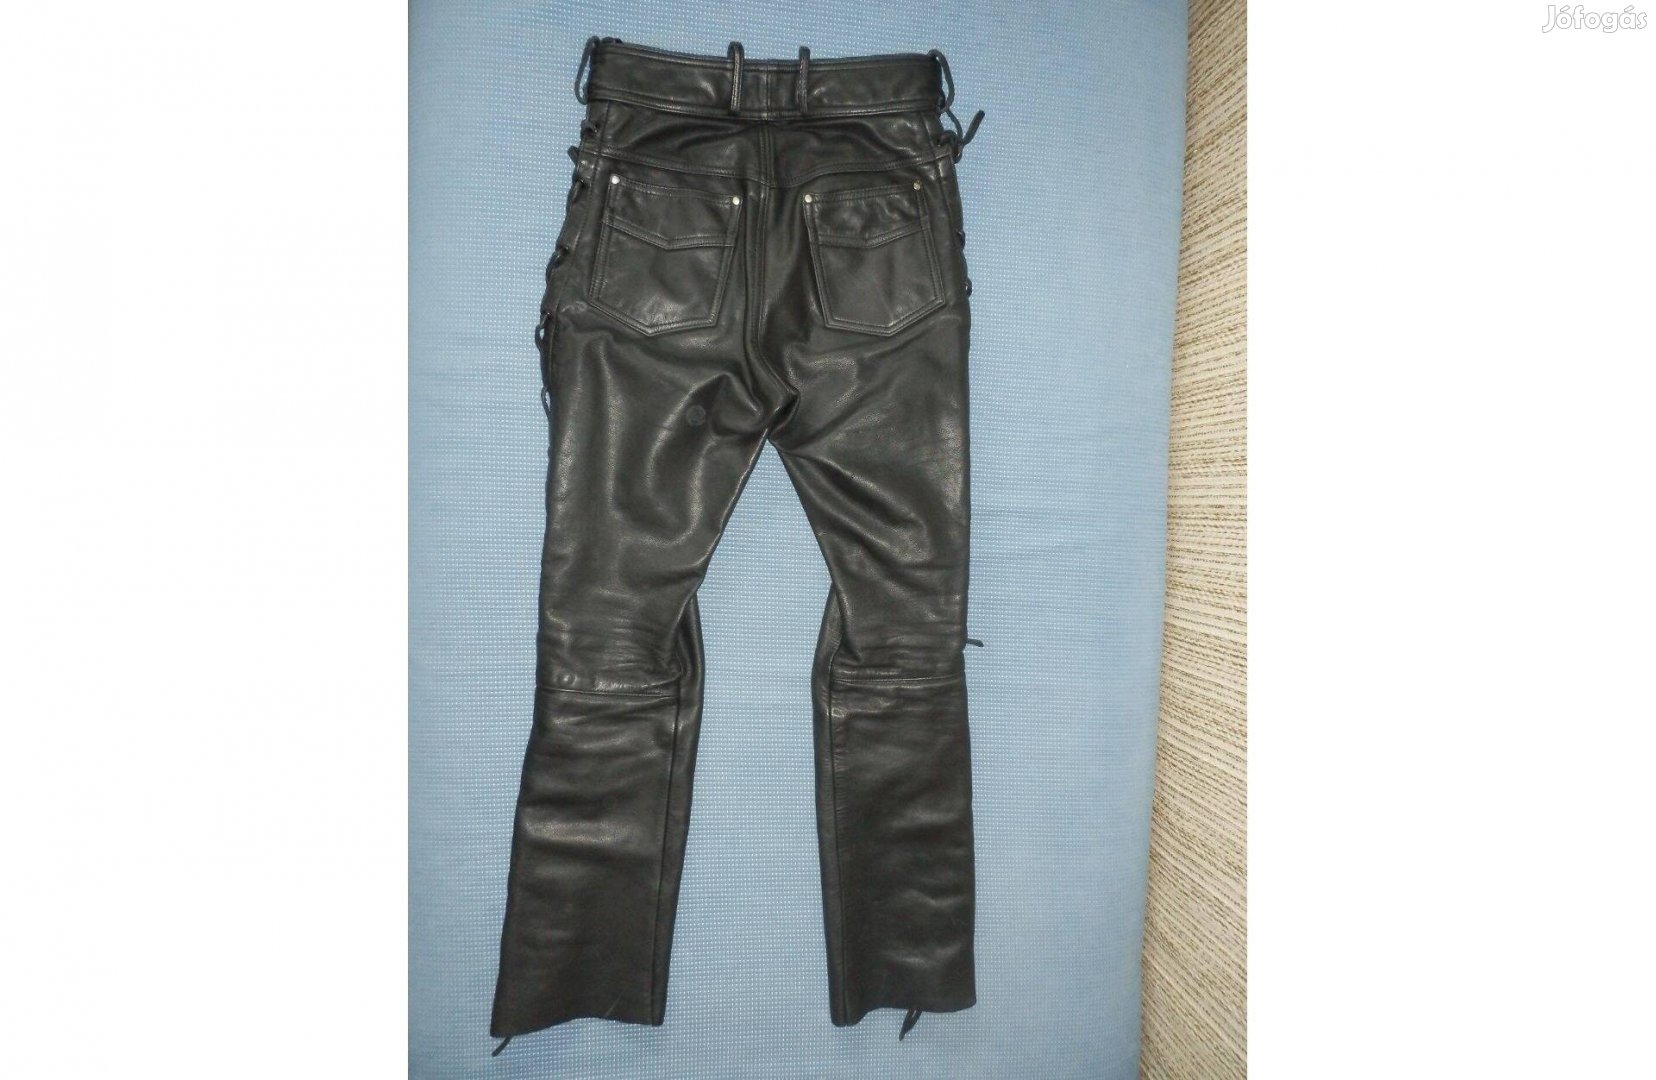 Belo márkájú oldalfűzős fekete marhabőr motoros nadrág 50-es